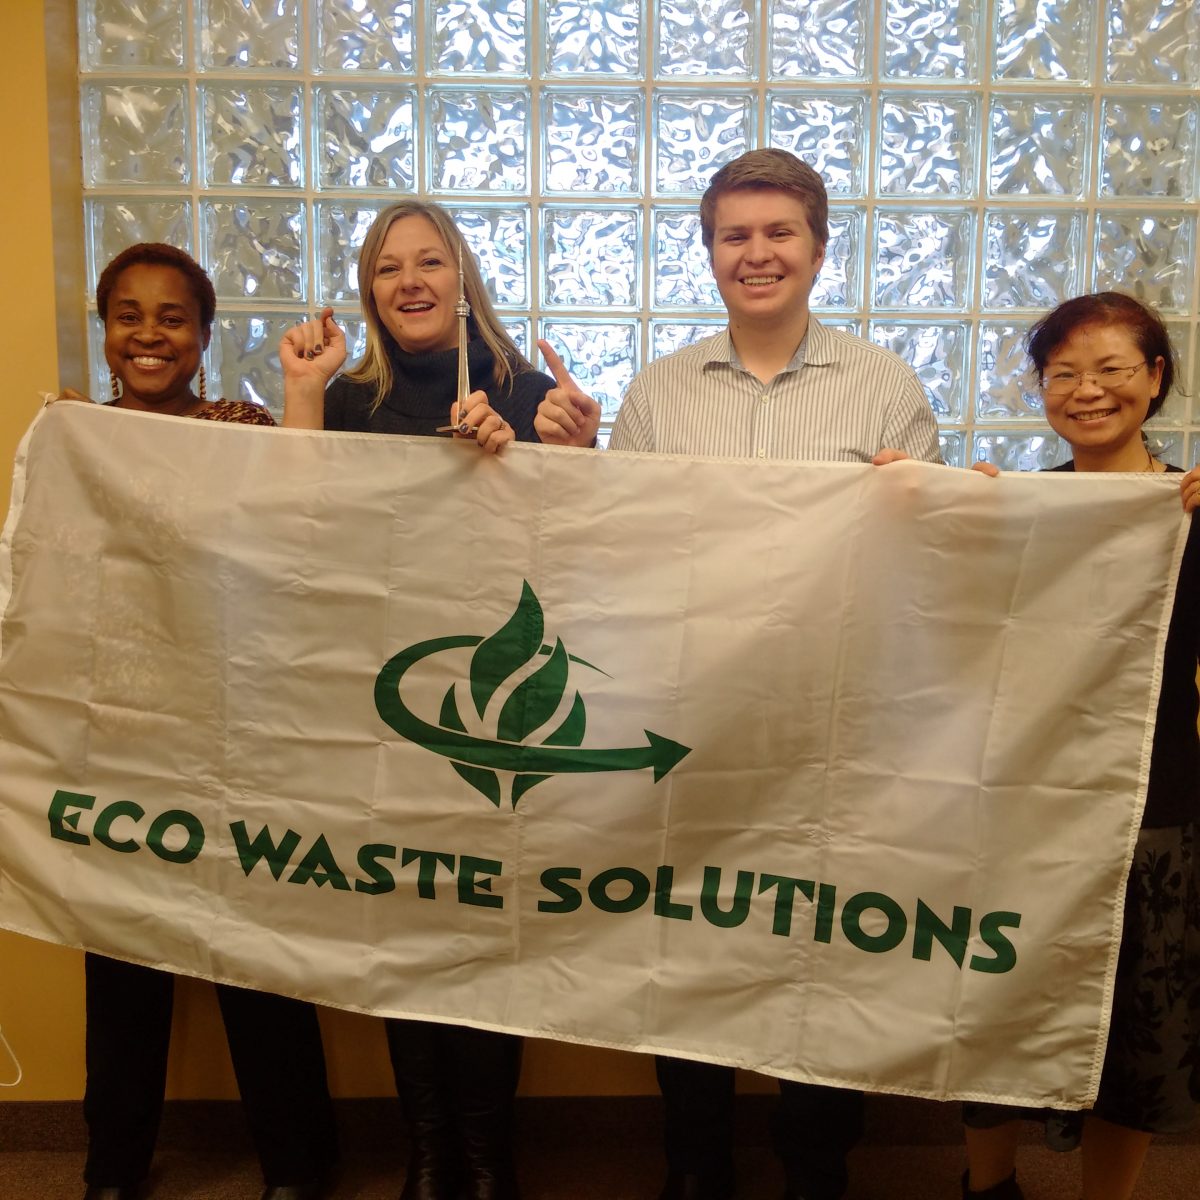 Eco Waste Solutions philanthropic event